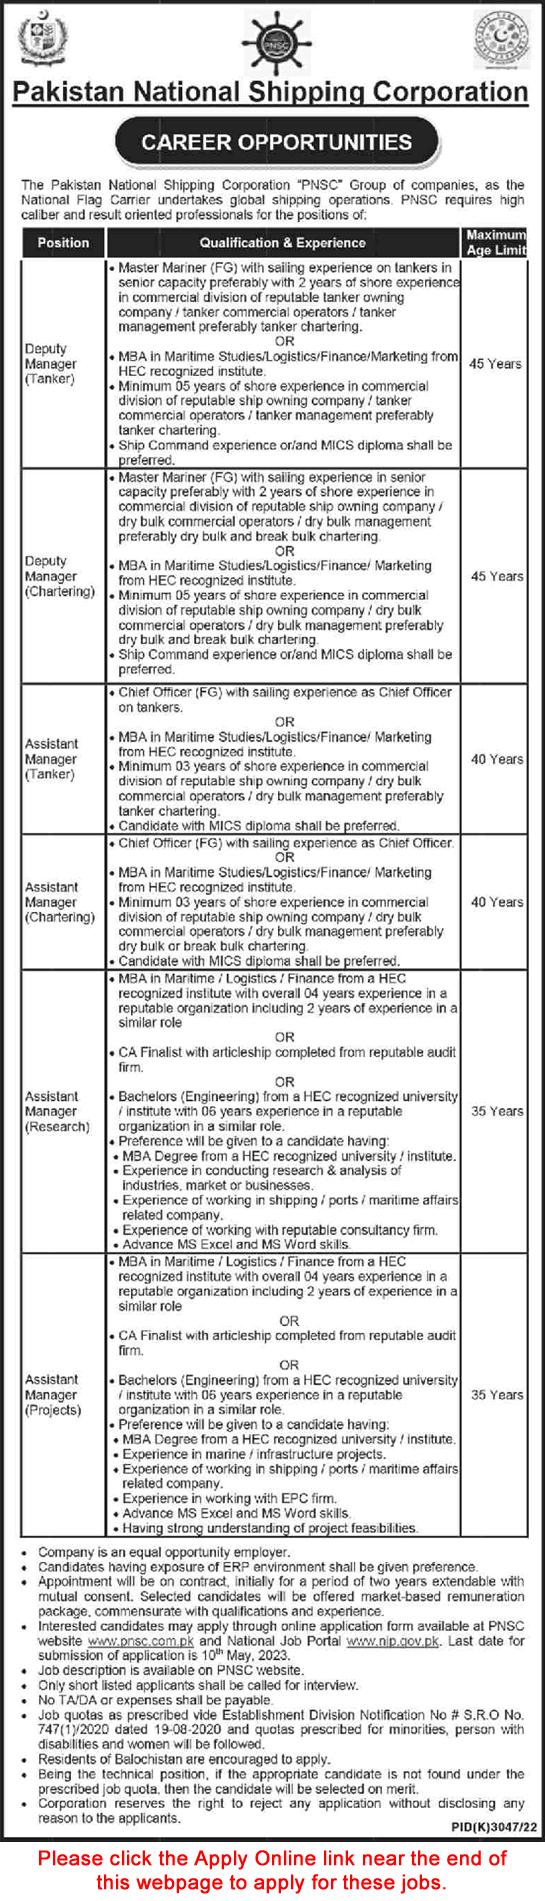 Pakistan National Shipping Corporation Karachi Jobs 2023 April / May Apply Online PNSC Latest